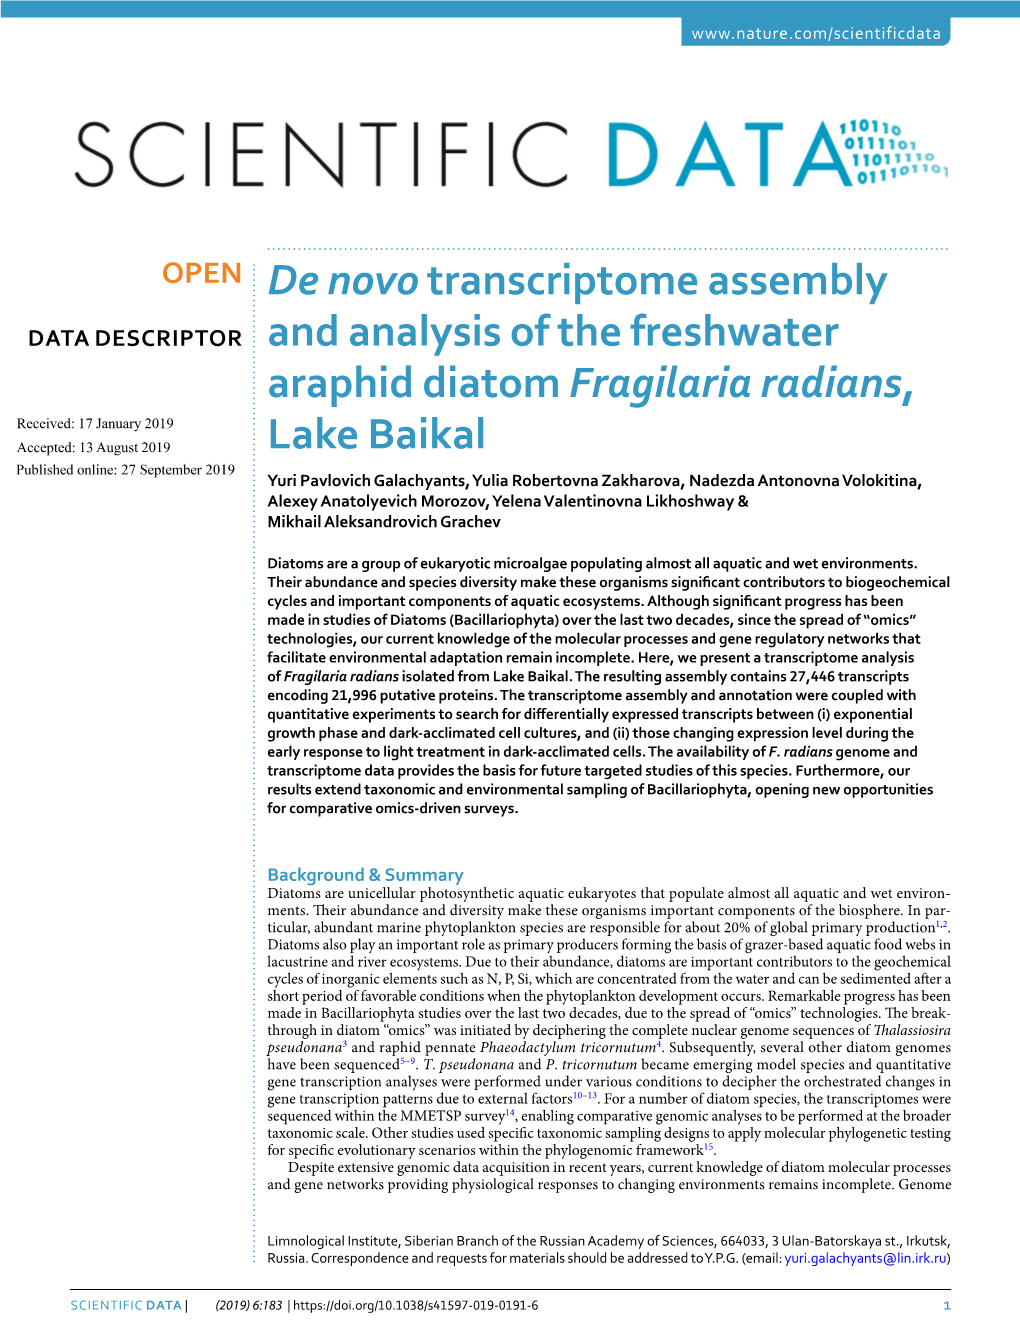 De Novo Transcriptome Assembly and Analysis of the Freshwater Araphid Diatom Fragilaria Radians, Lake Baikal